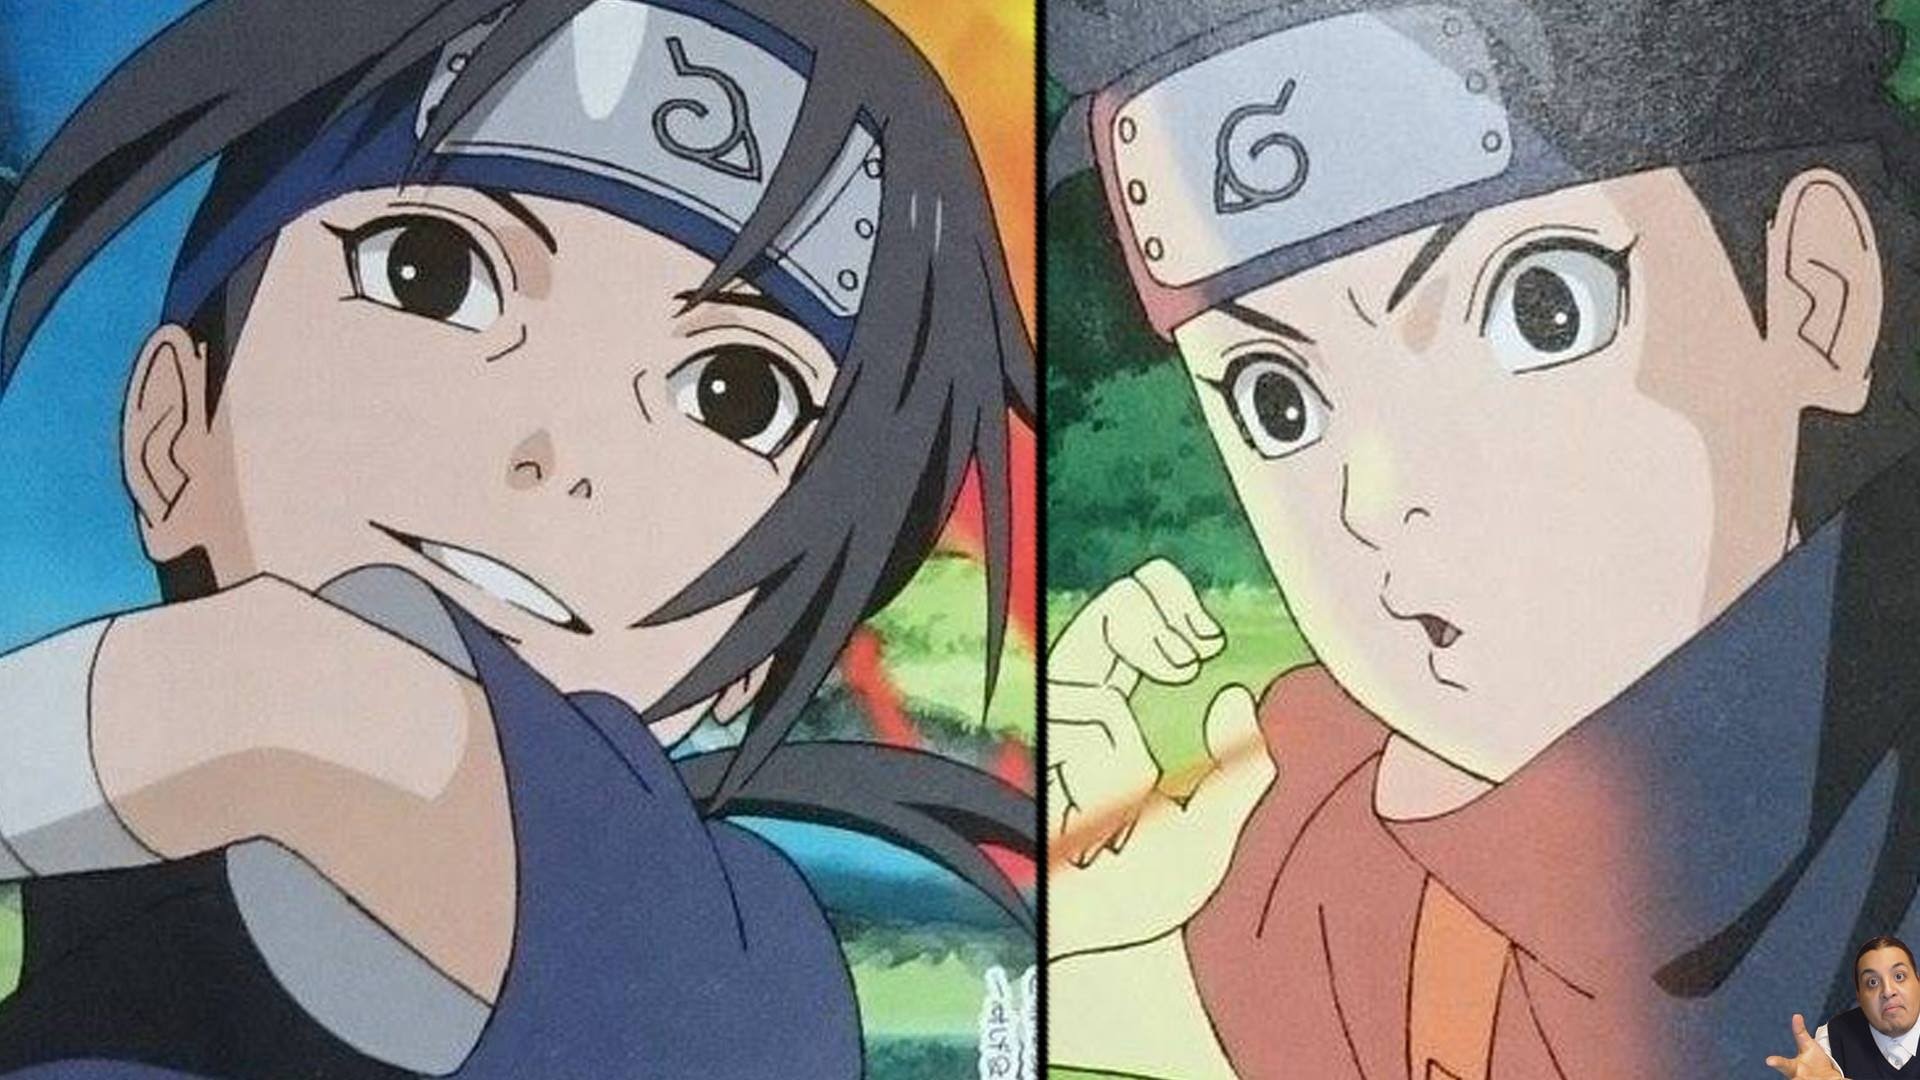 1920x1080 Naruto Shippuden Itachi Anime Update -- Episode 1 = Kid Itachi Vs Kid Shisui  - YouTube